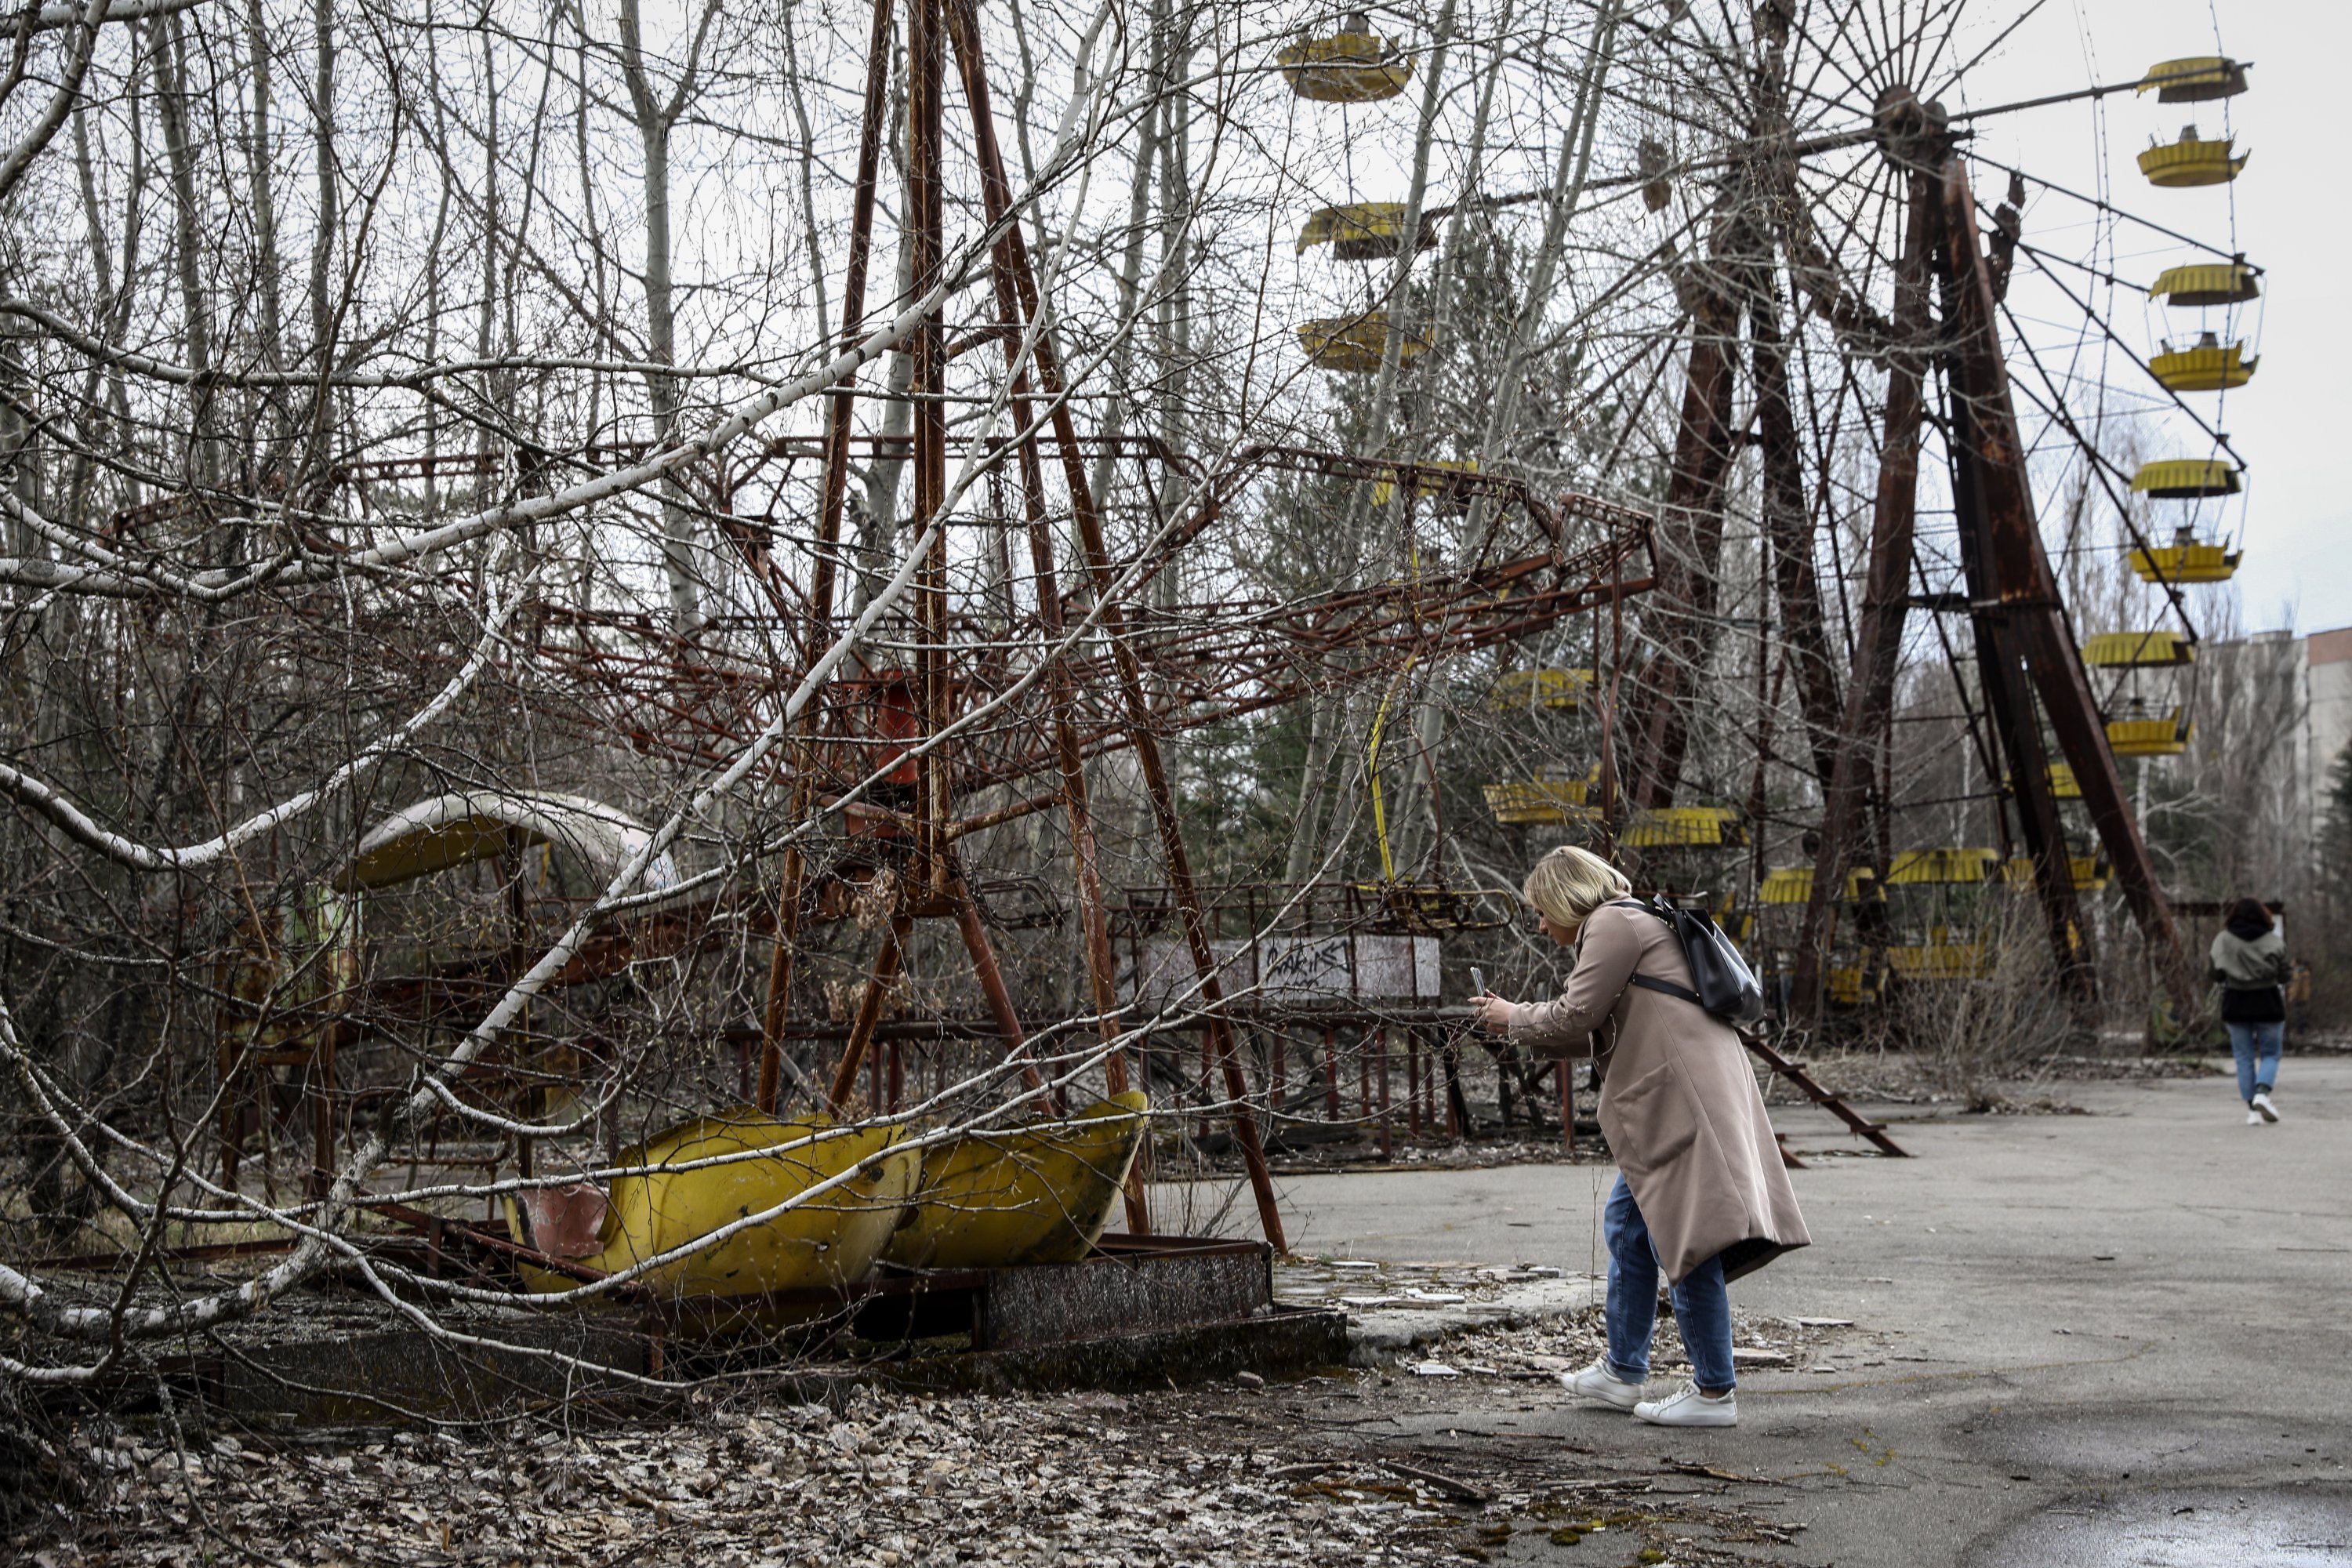 A woman photographs an old carousel near the Ferris wheel in the abandoned city of Pripyat, near Chernobyl, Ukraine, April 15, 2021. (EPA Photo)